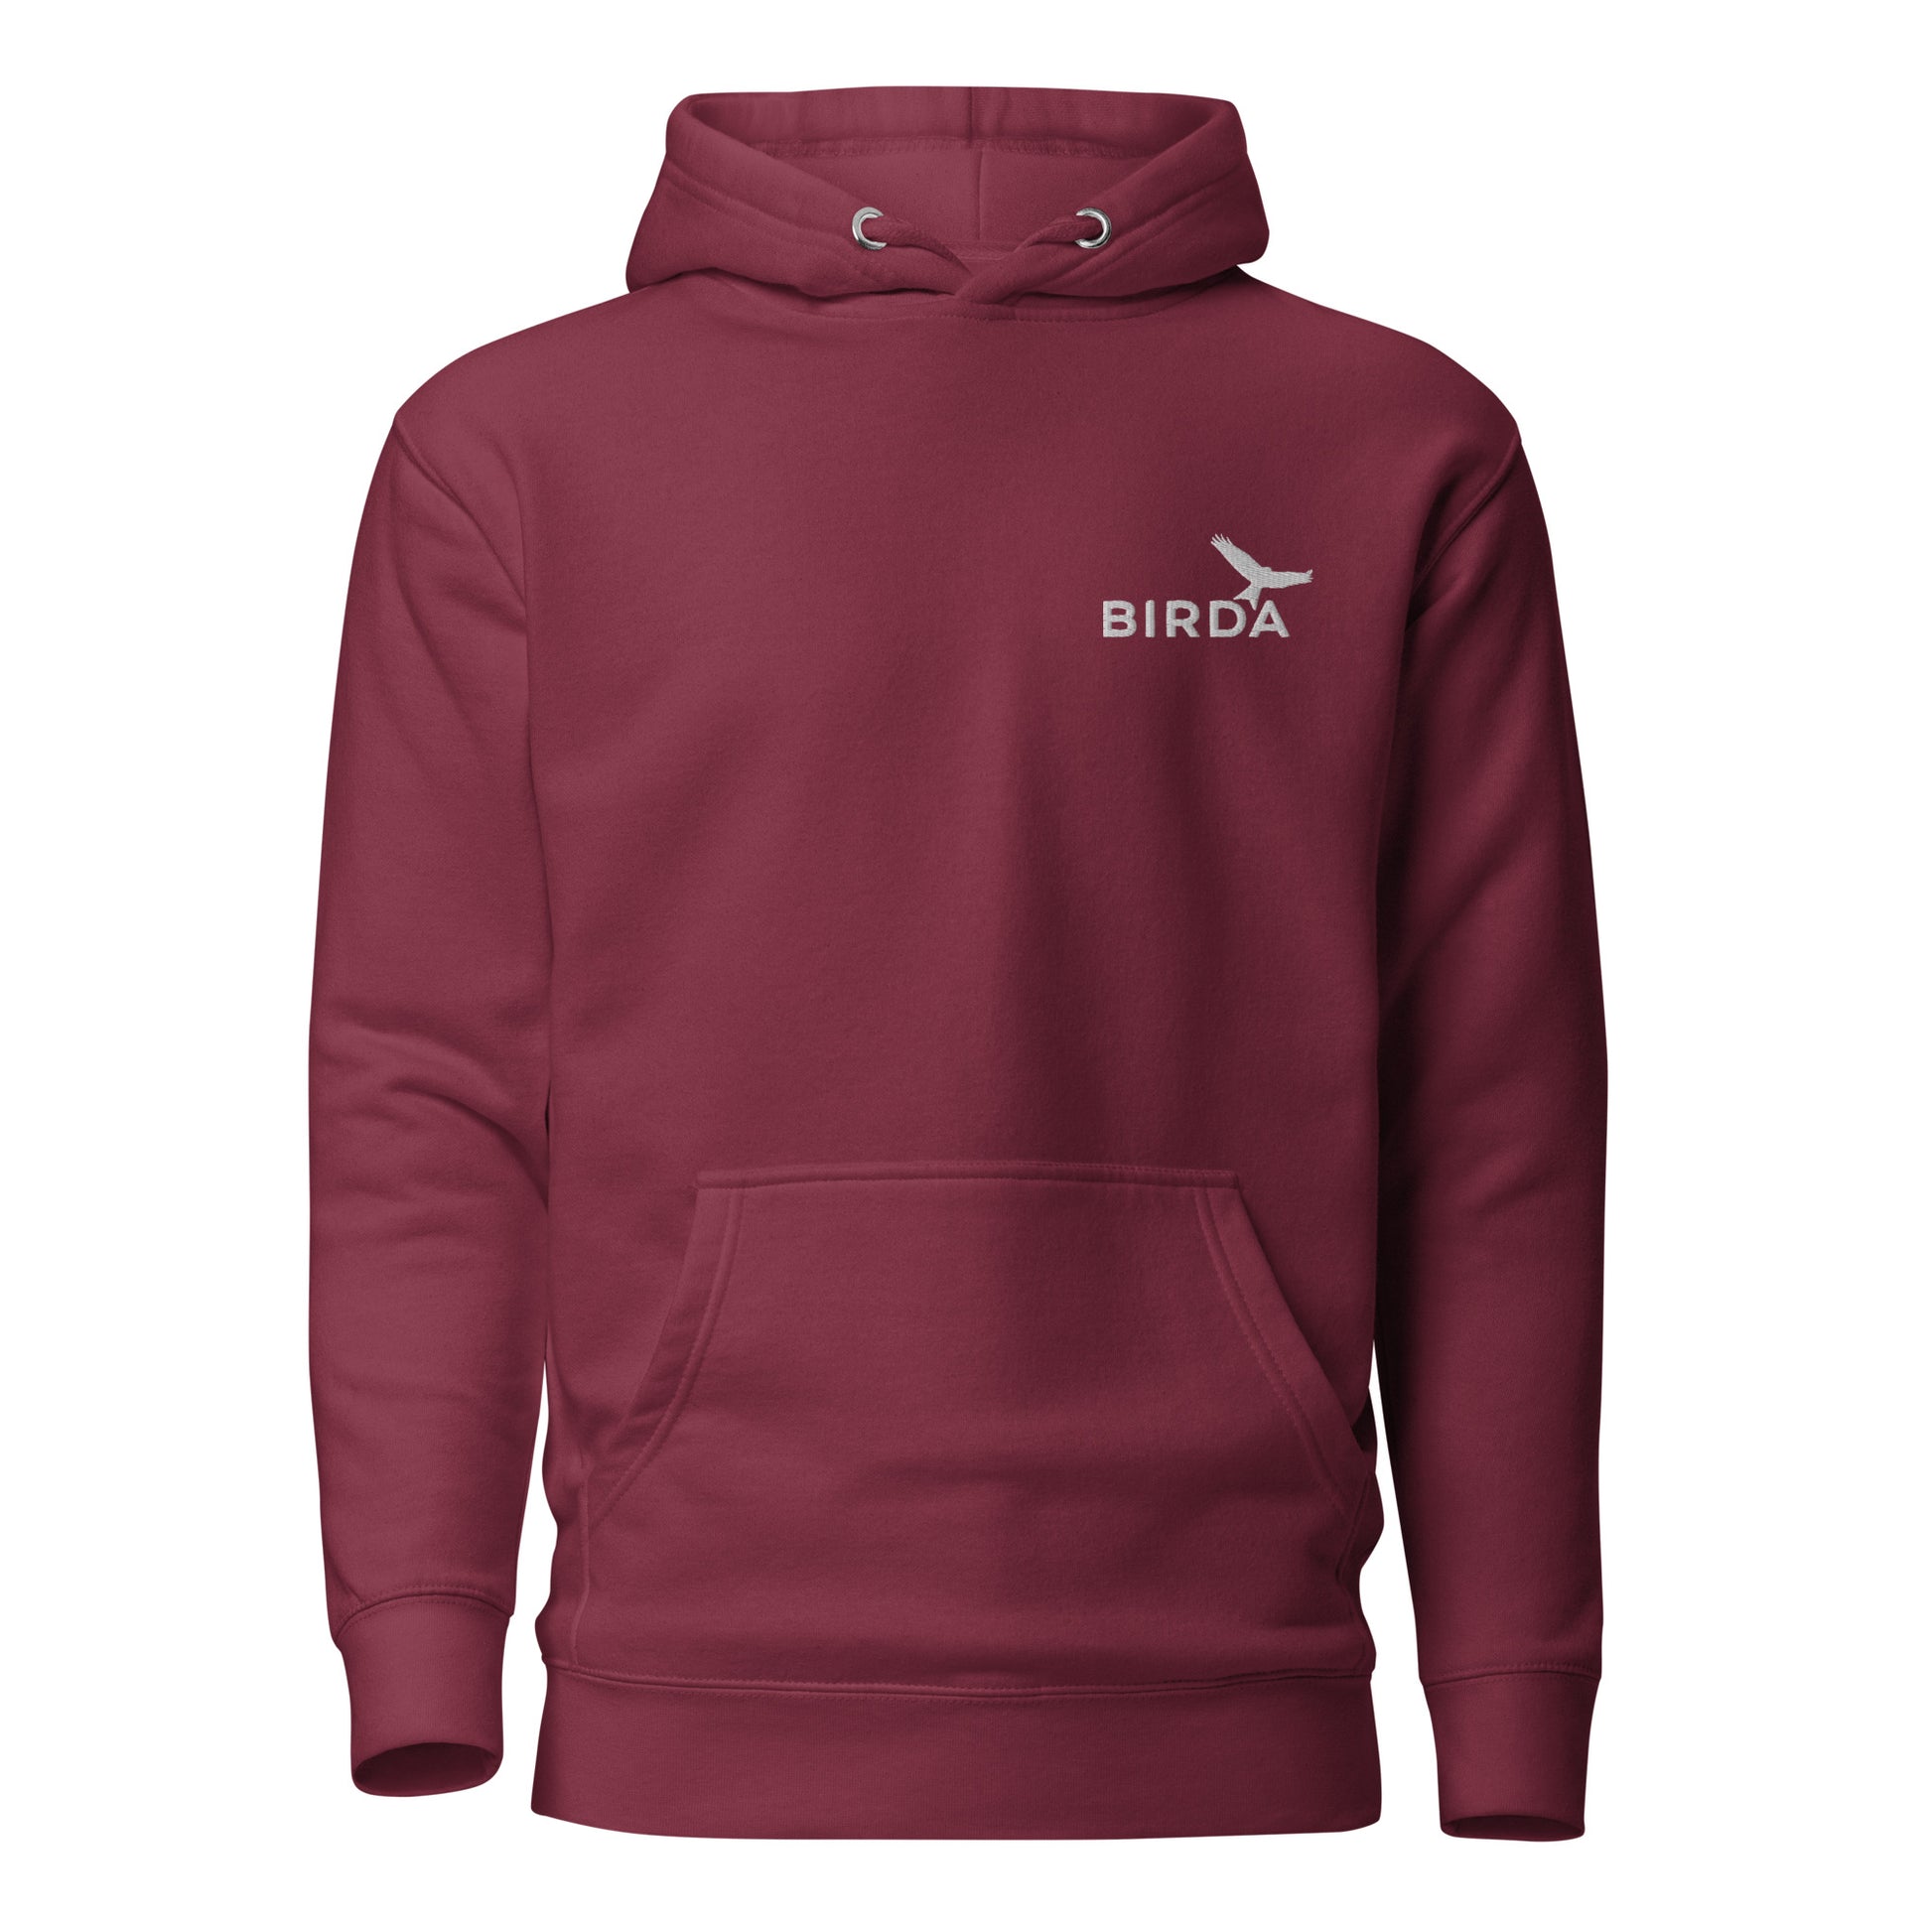 Birda bird premium hoodie - maroon